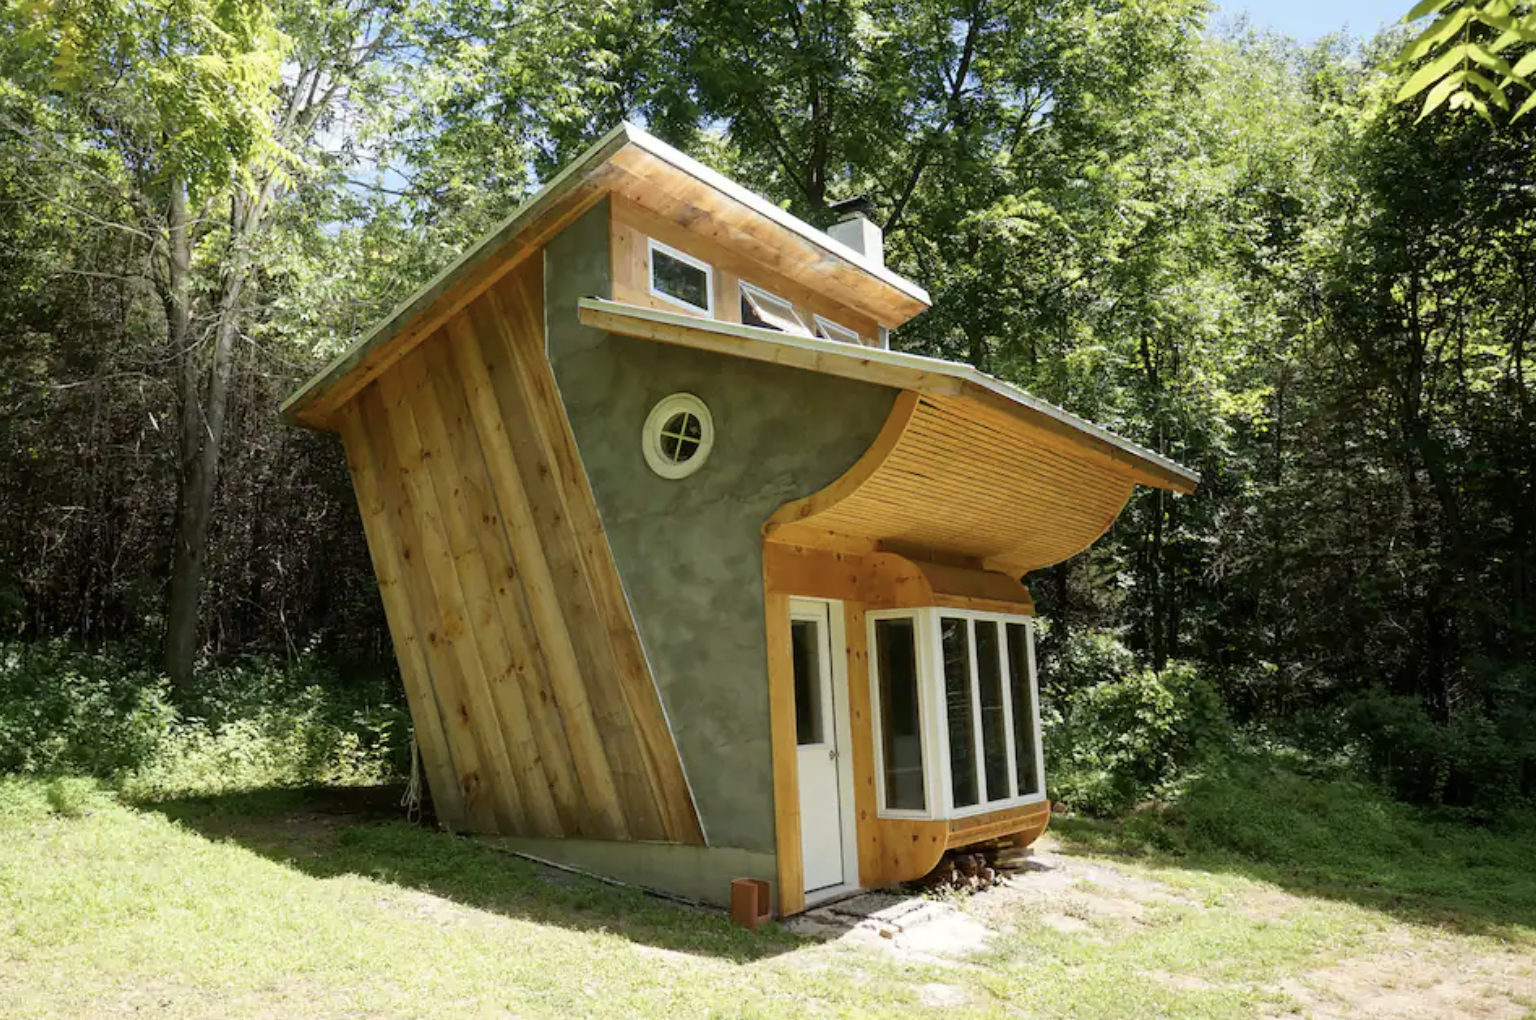 Tiny Houses Design Ideas For Small Homes